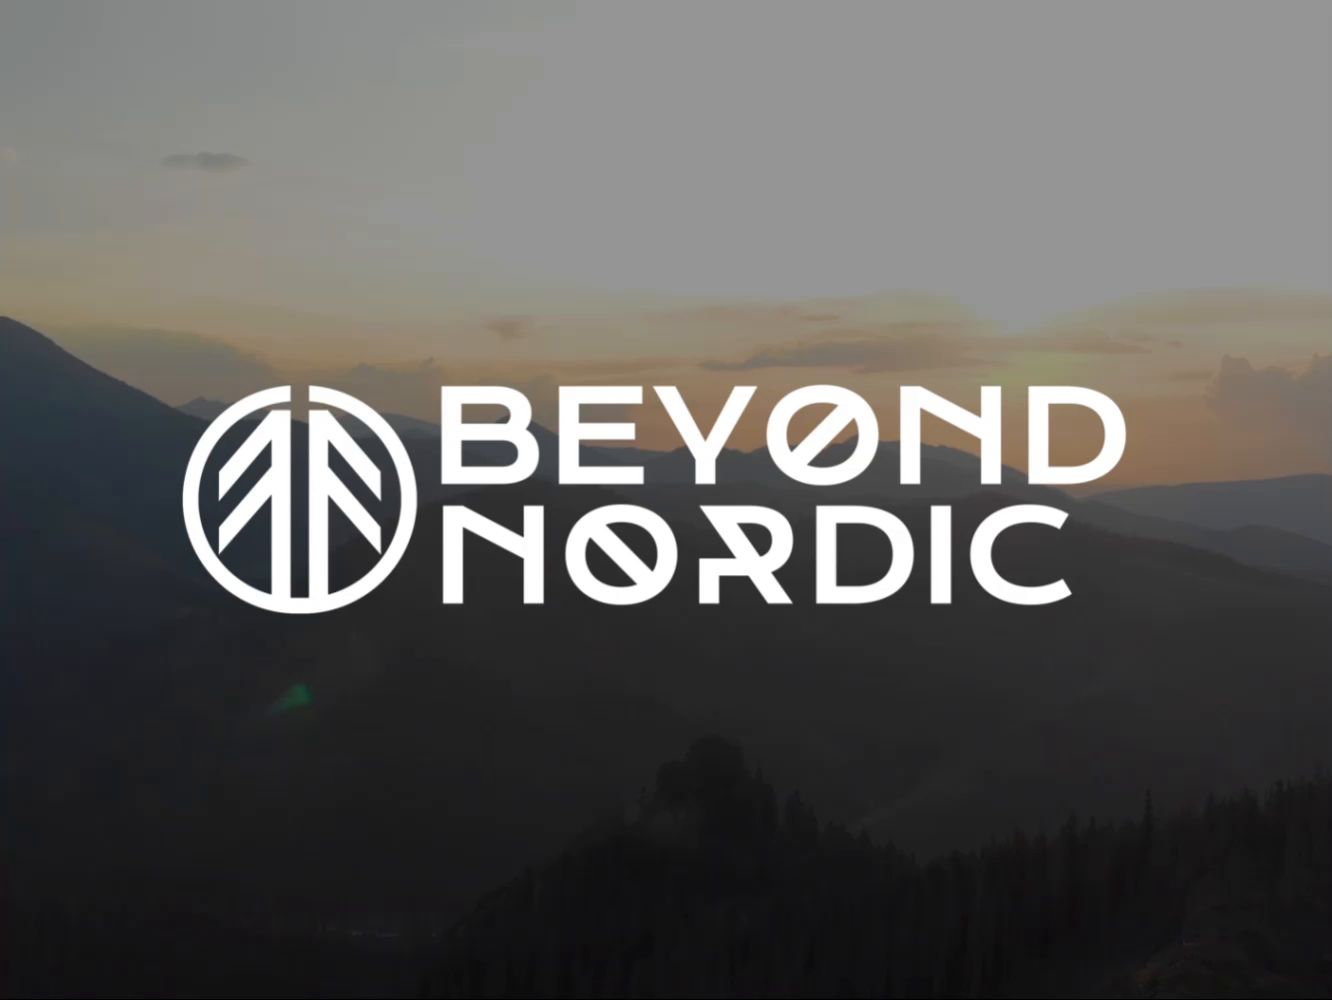 Beyond Nordic logo animation by Daniel Öberg on Dribbble